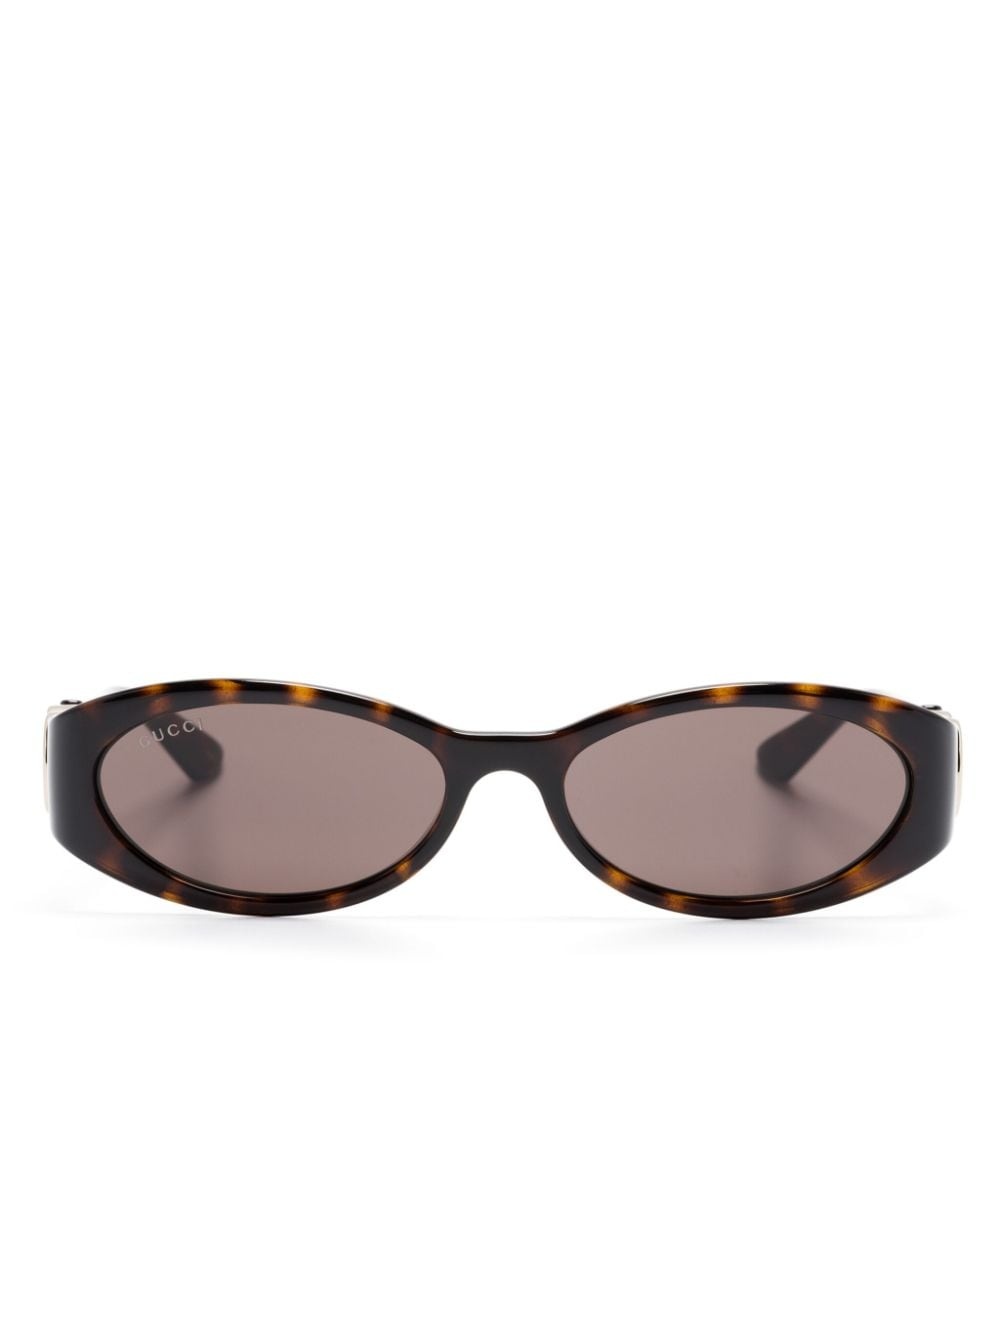 oval-frame sunglasses - 1